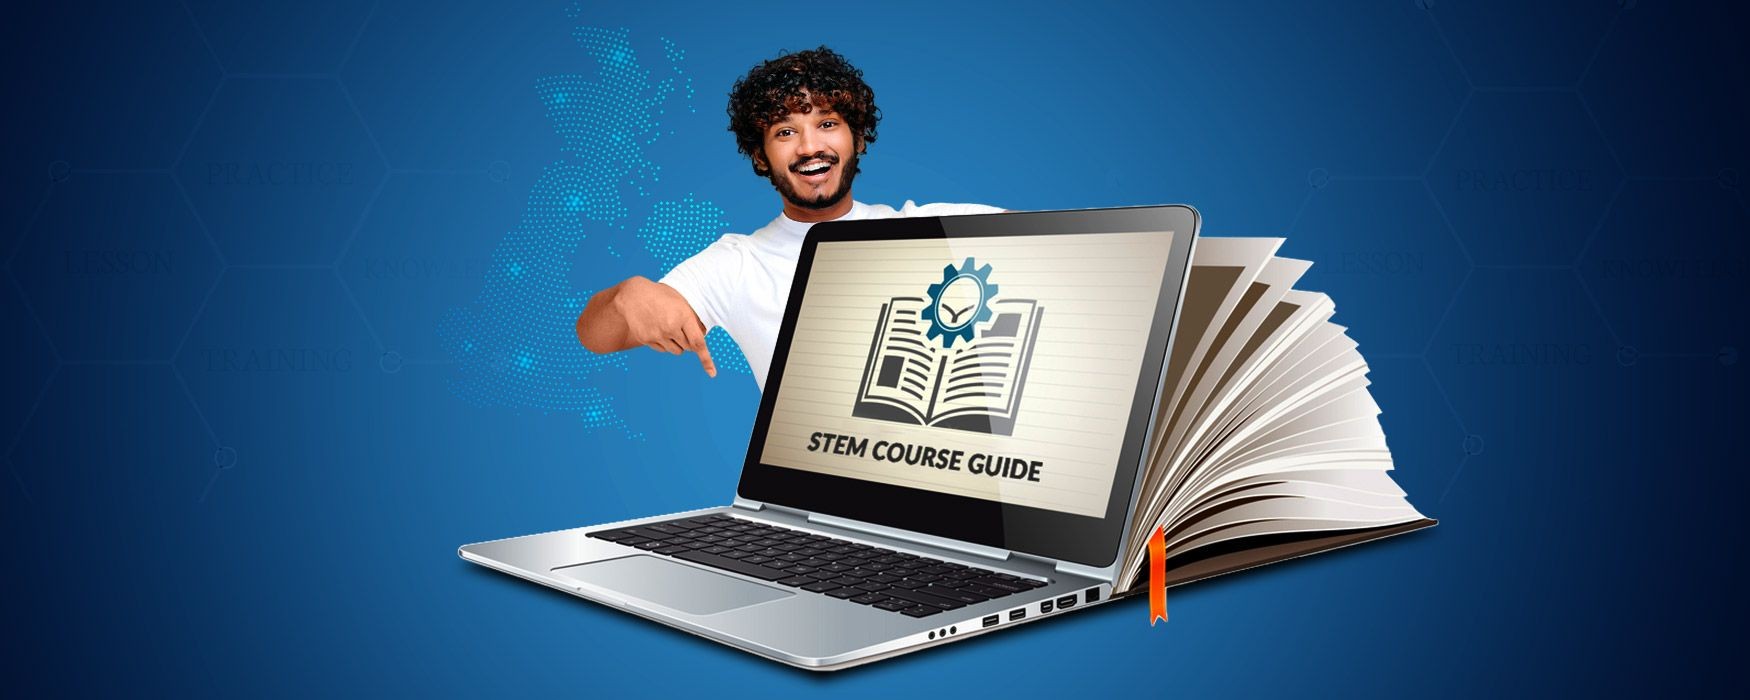 Guide-for-STEM-Course-in-UK.jpg